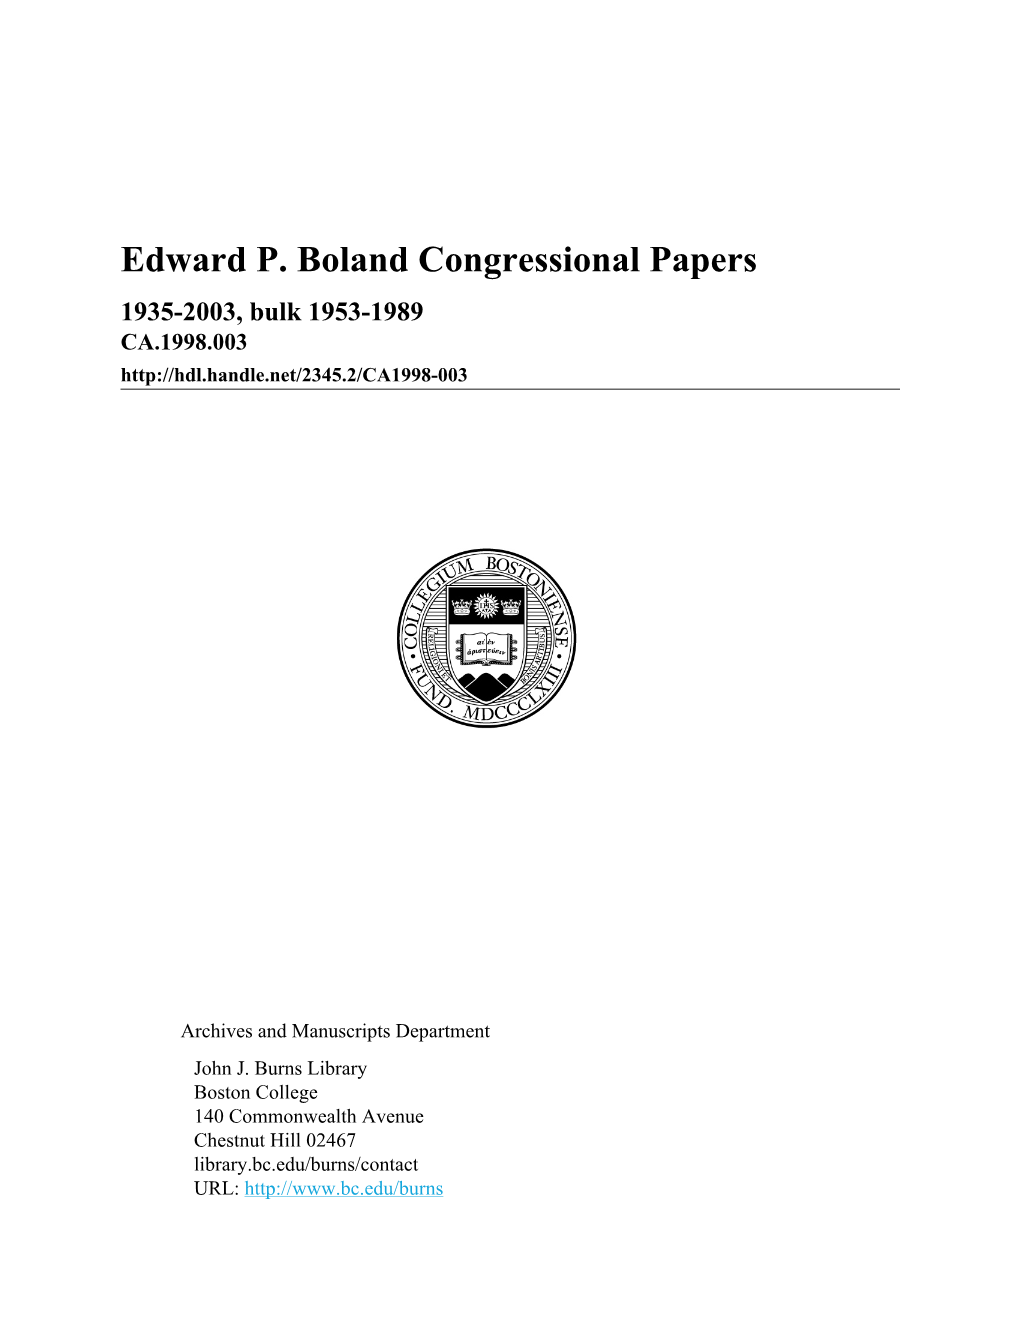 Edward P. Boland Congressional Papers 1935-2003, Bulk 1953-1989 CA.1998.003